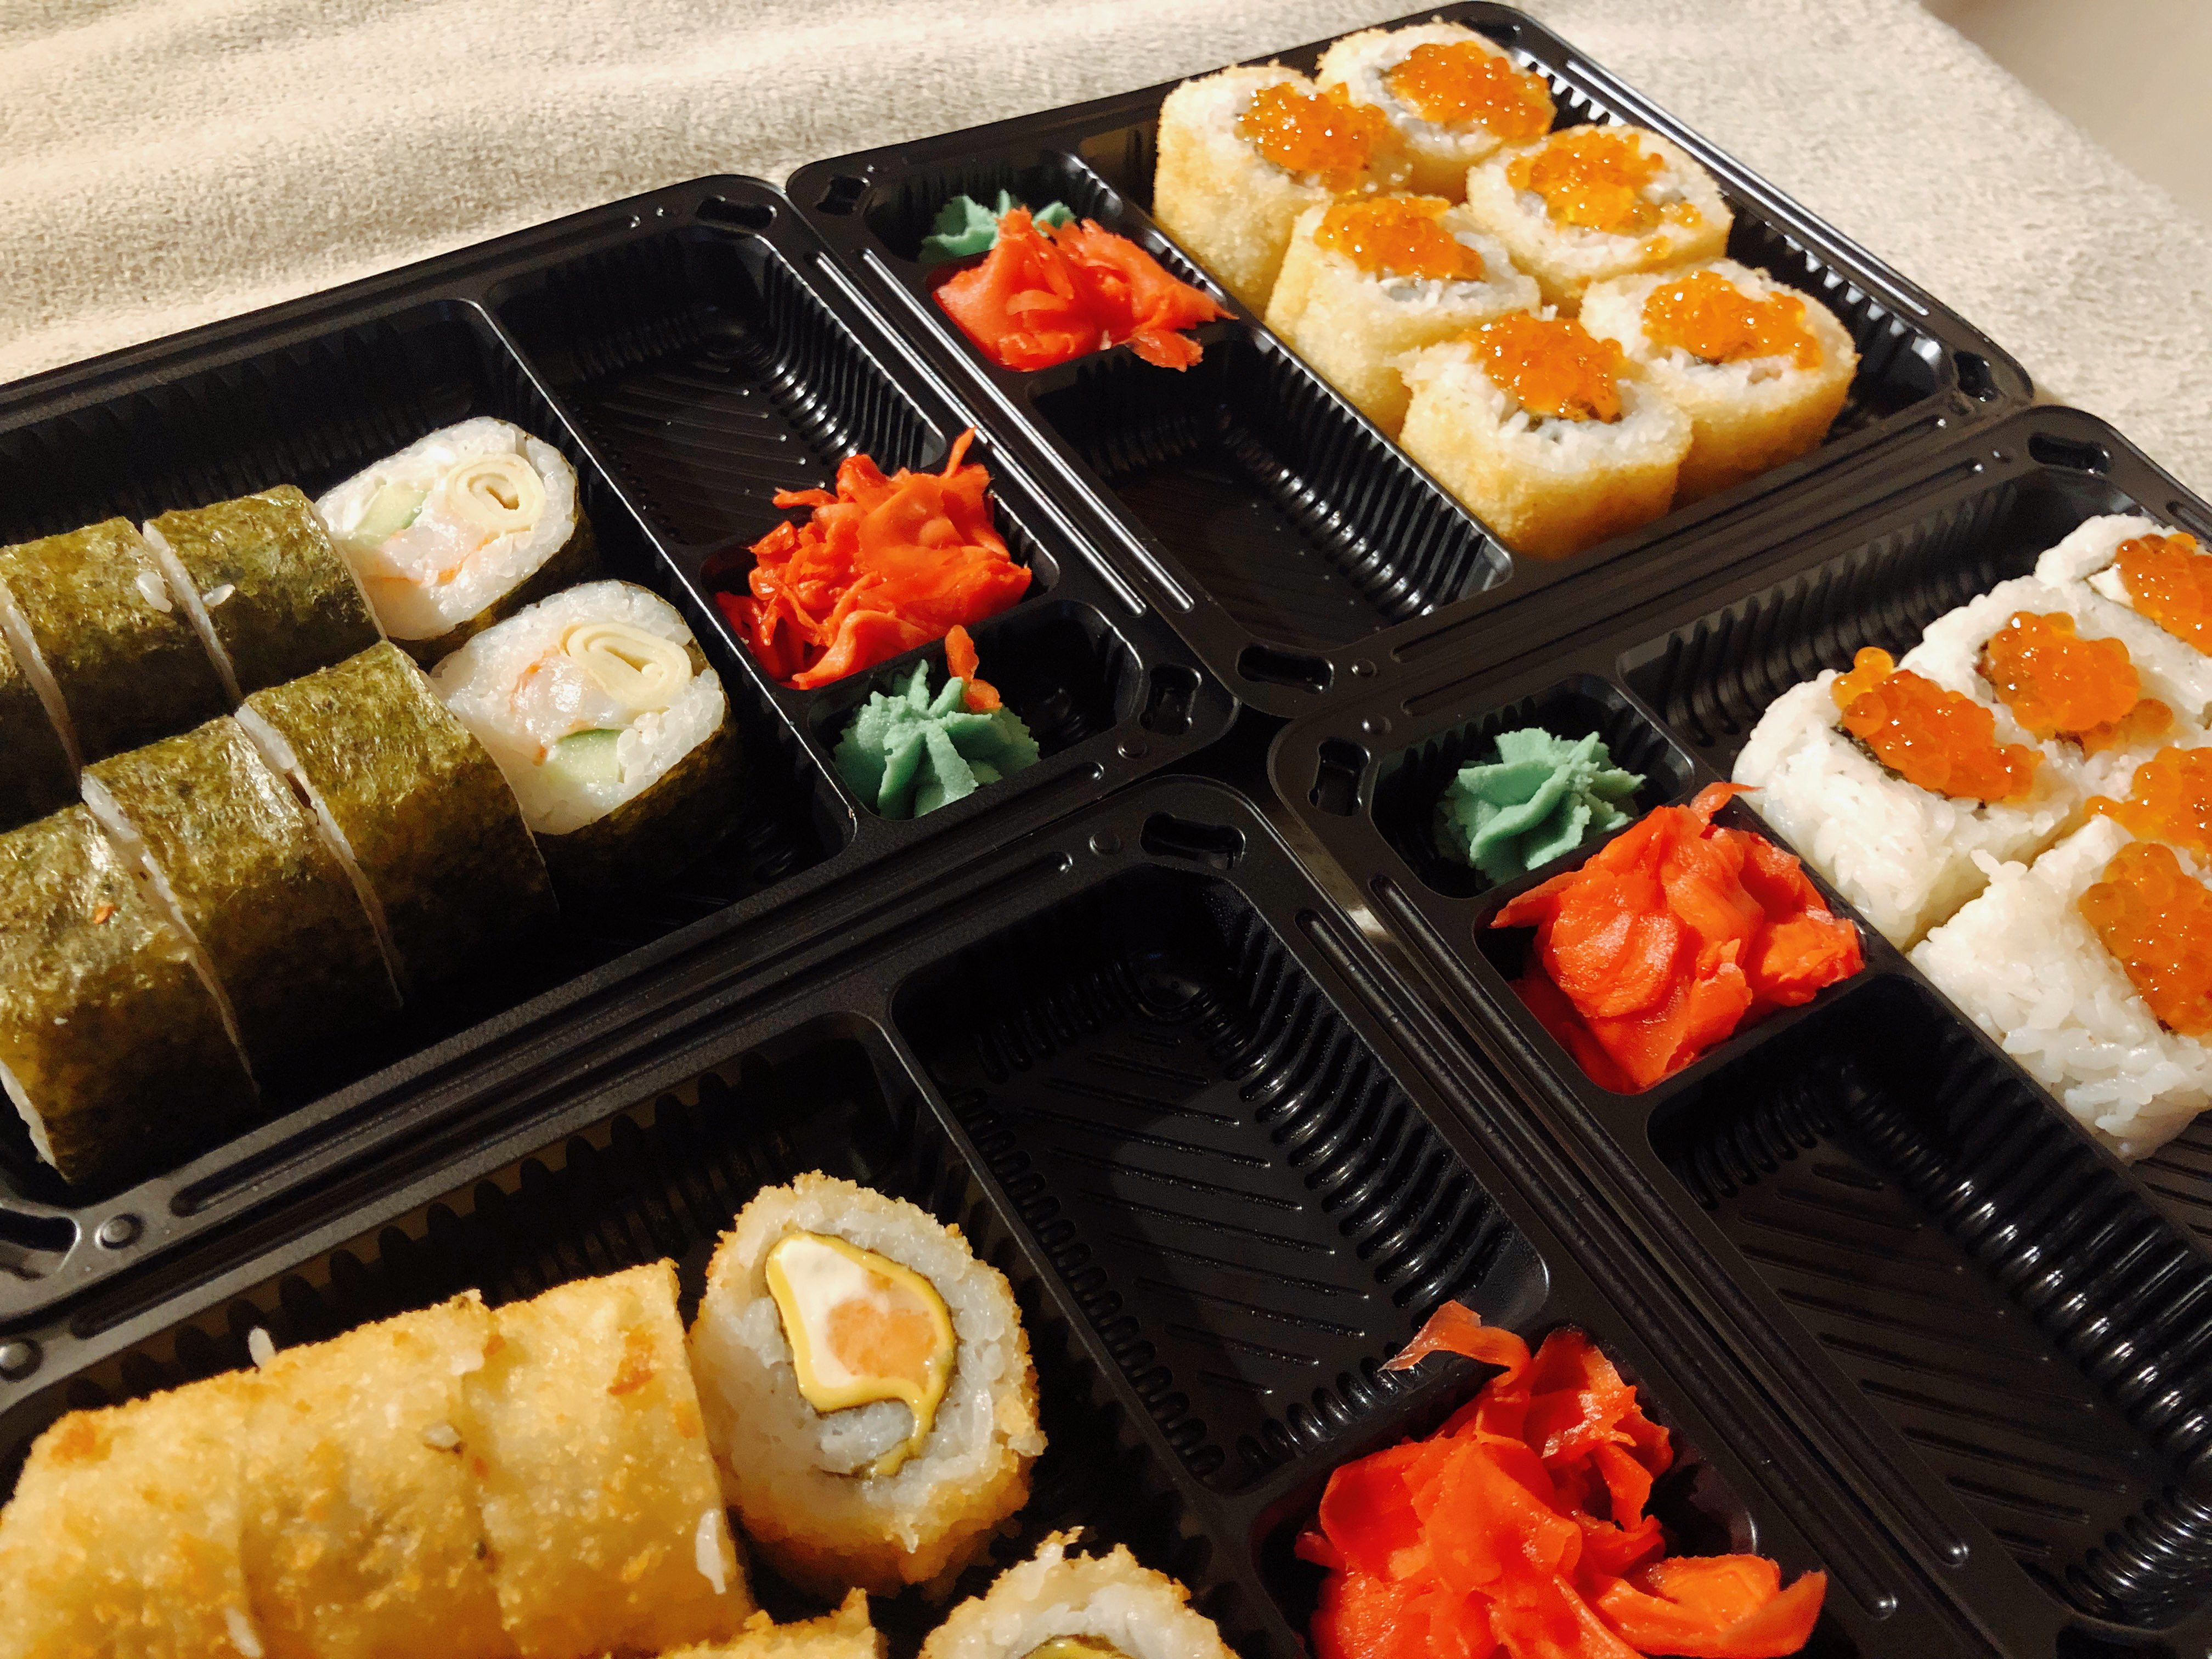 Заказать суши дешево и вкусно фото 72